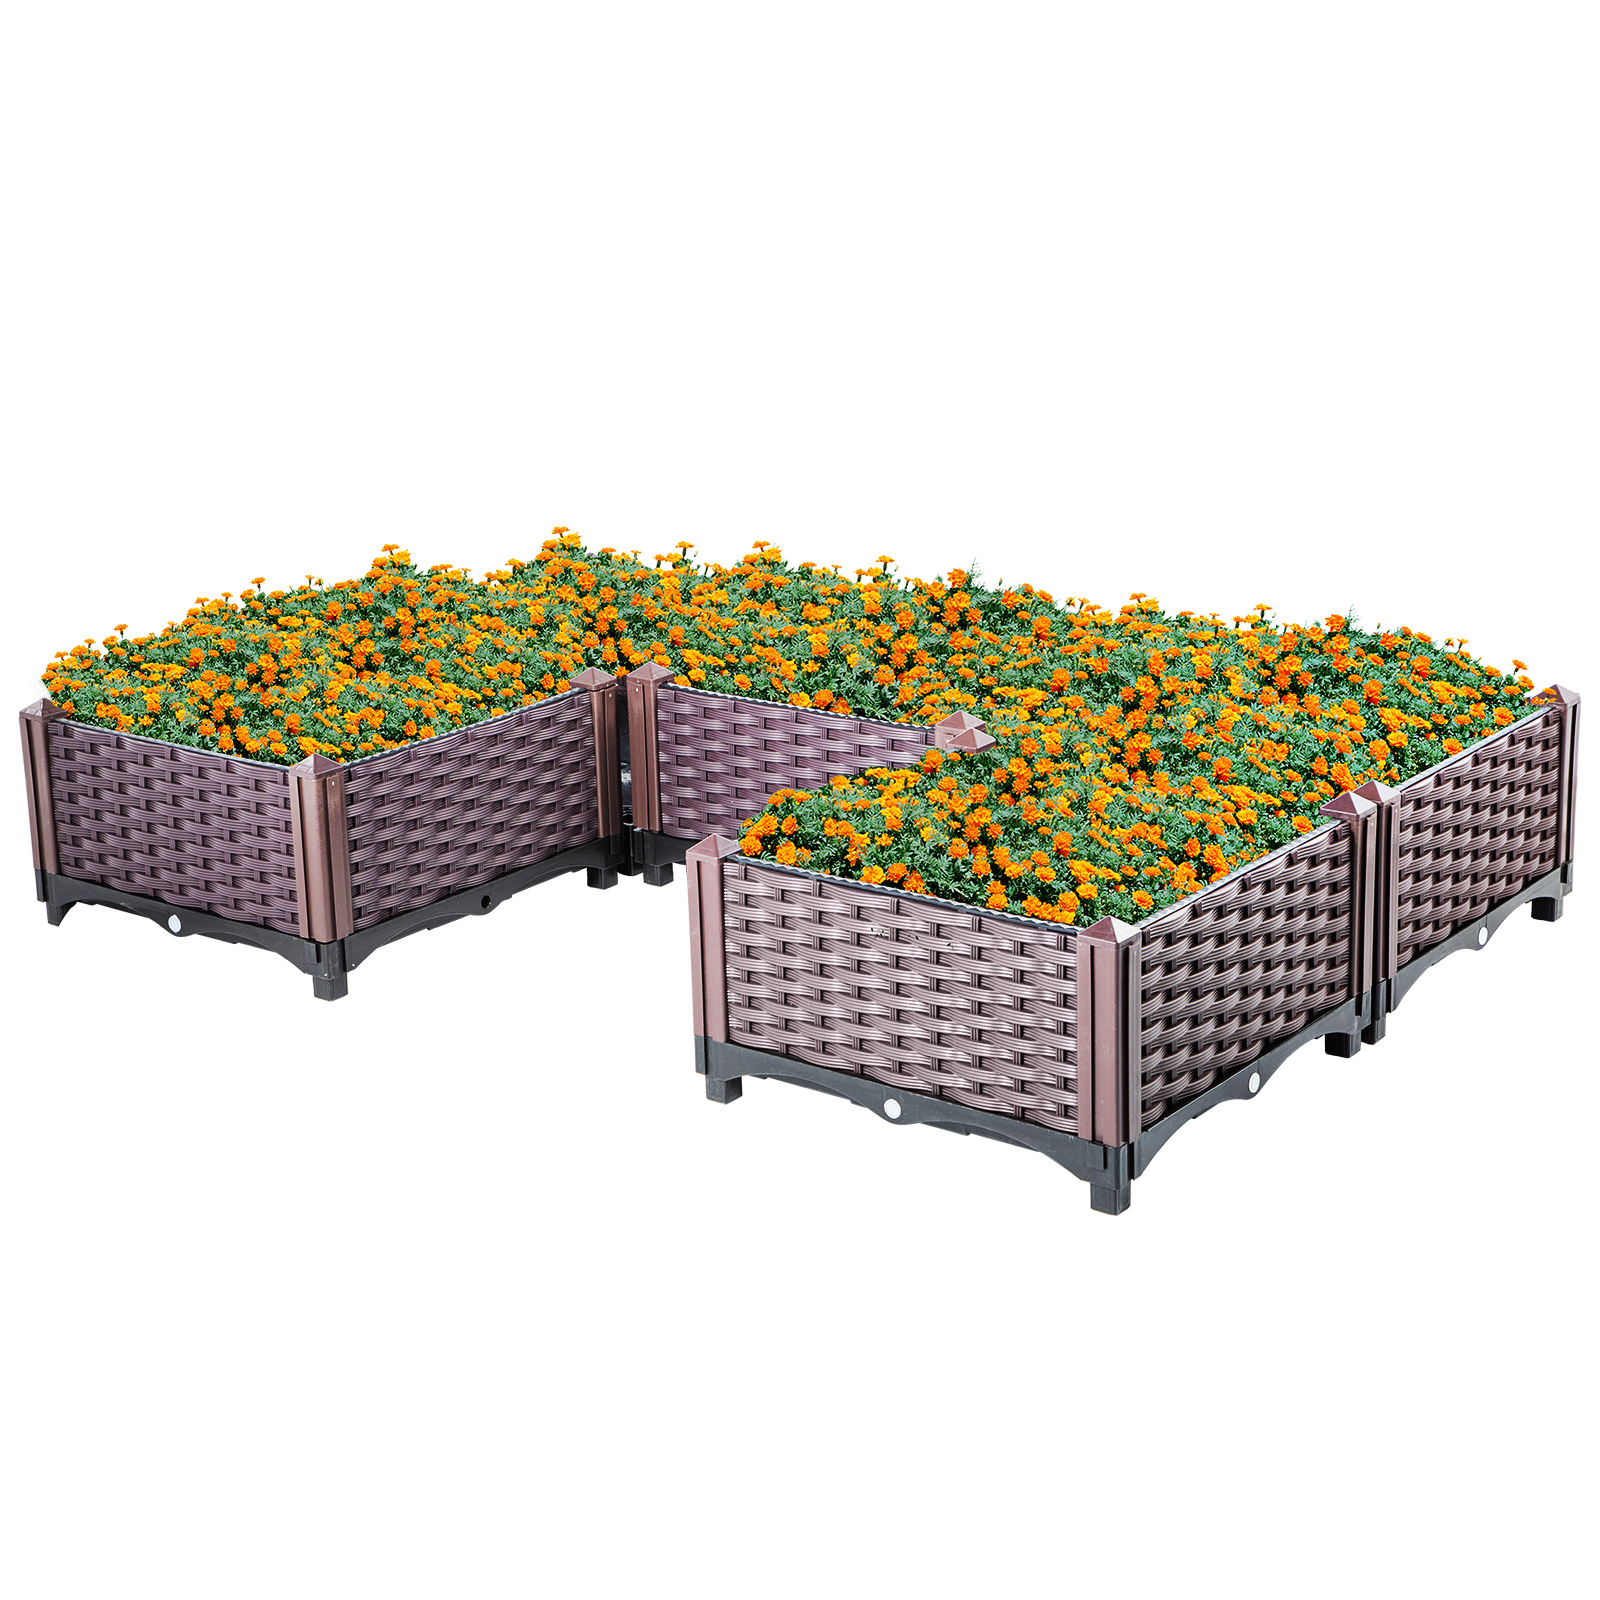 Vevor Plastic Raised Garden Bed Flower Box Kit 9"h Brown Rattan Style Set Of 5 от Vevor Many GEOs